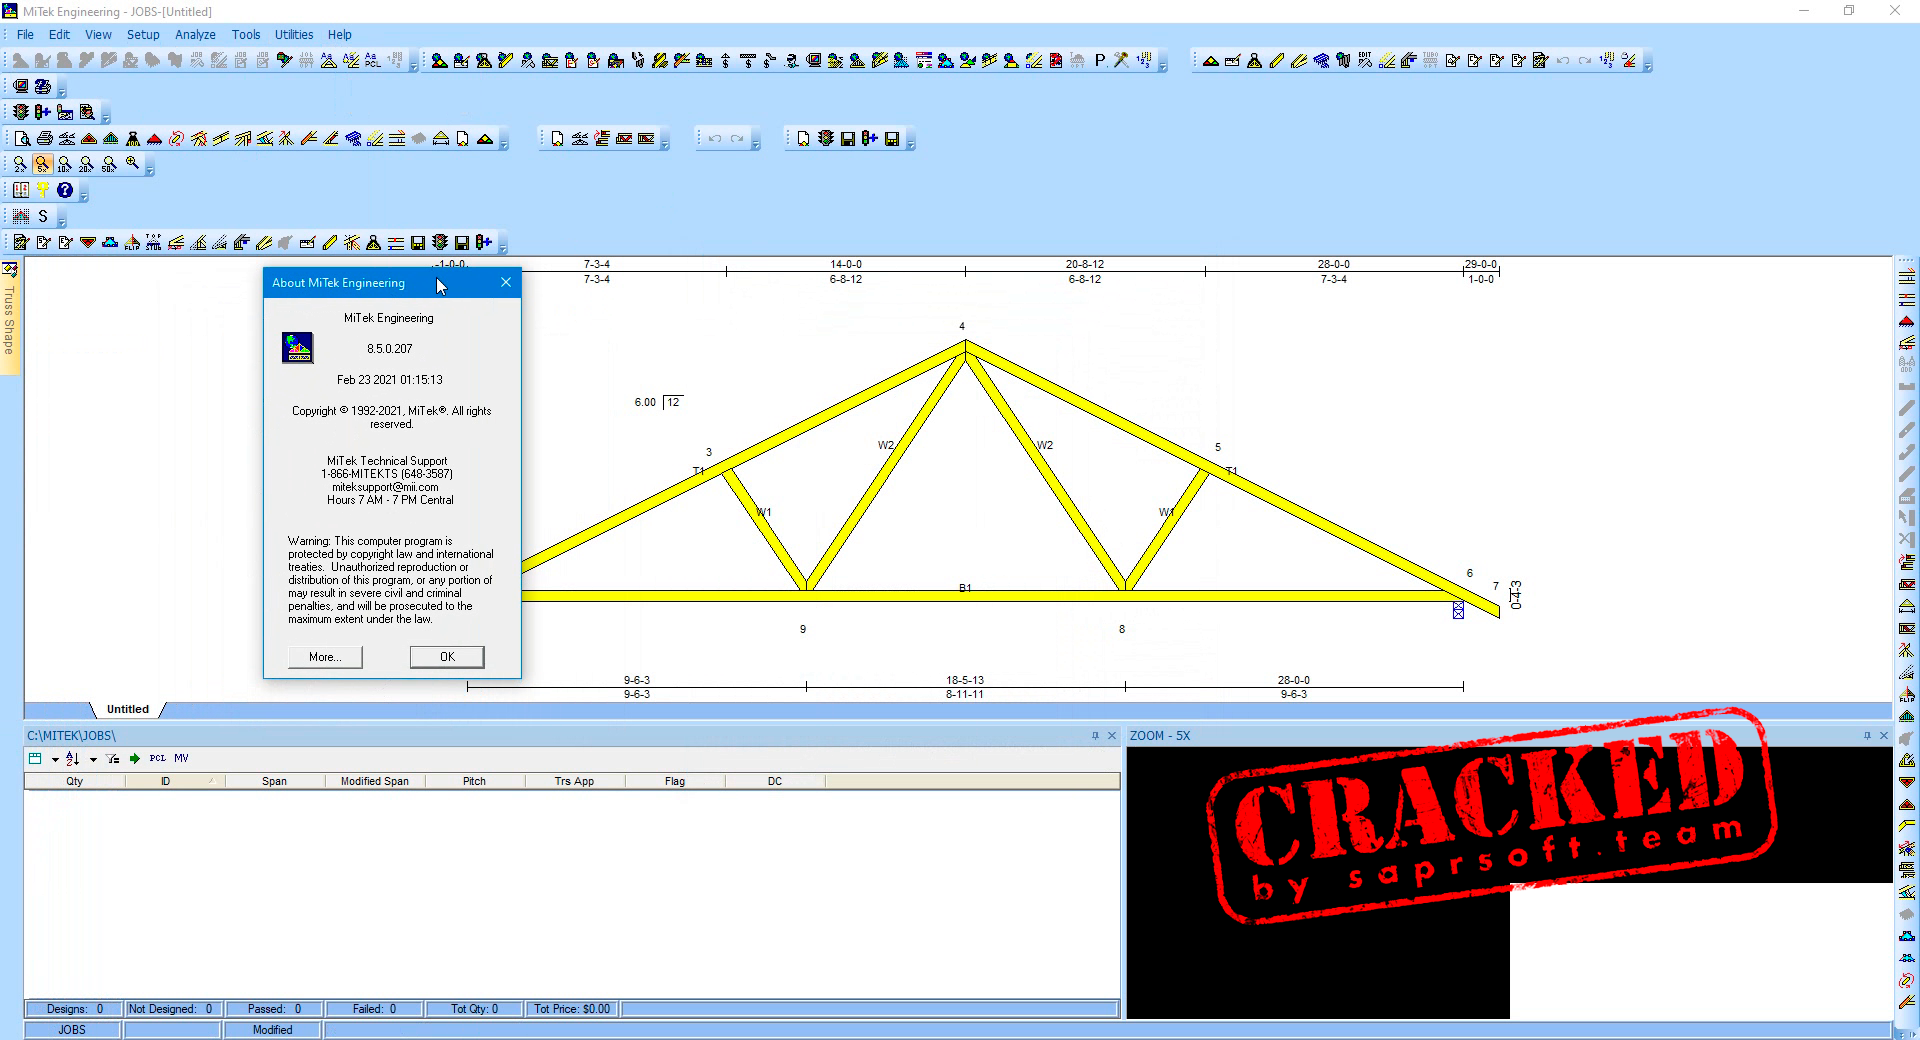 [Cracked] MiTek Structure 8.5.0 for USA / CANADA crack | Crack - custom license by saprsoft.team